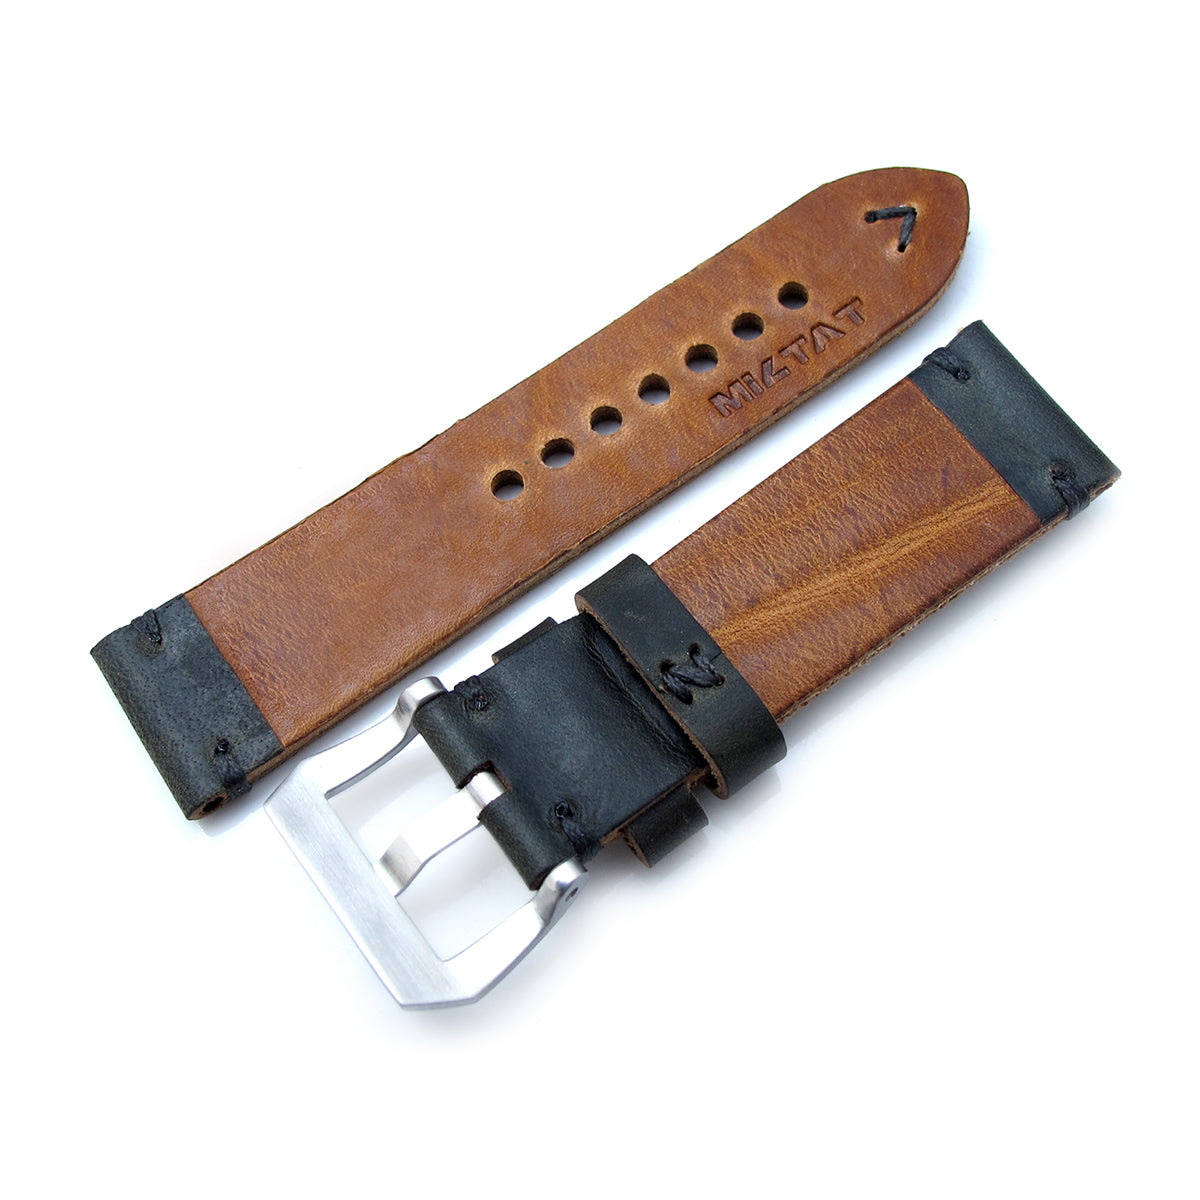 24mm MiLTAT Horween Chromexcel Watch Strap Blackish Green Grey Stitching Strapcode Watch Bands